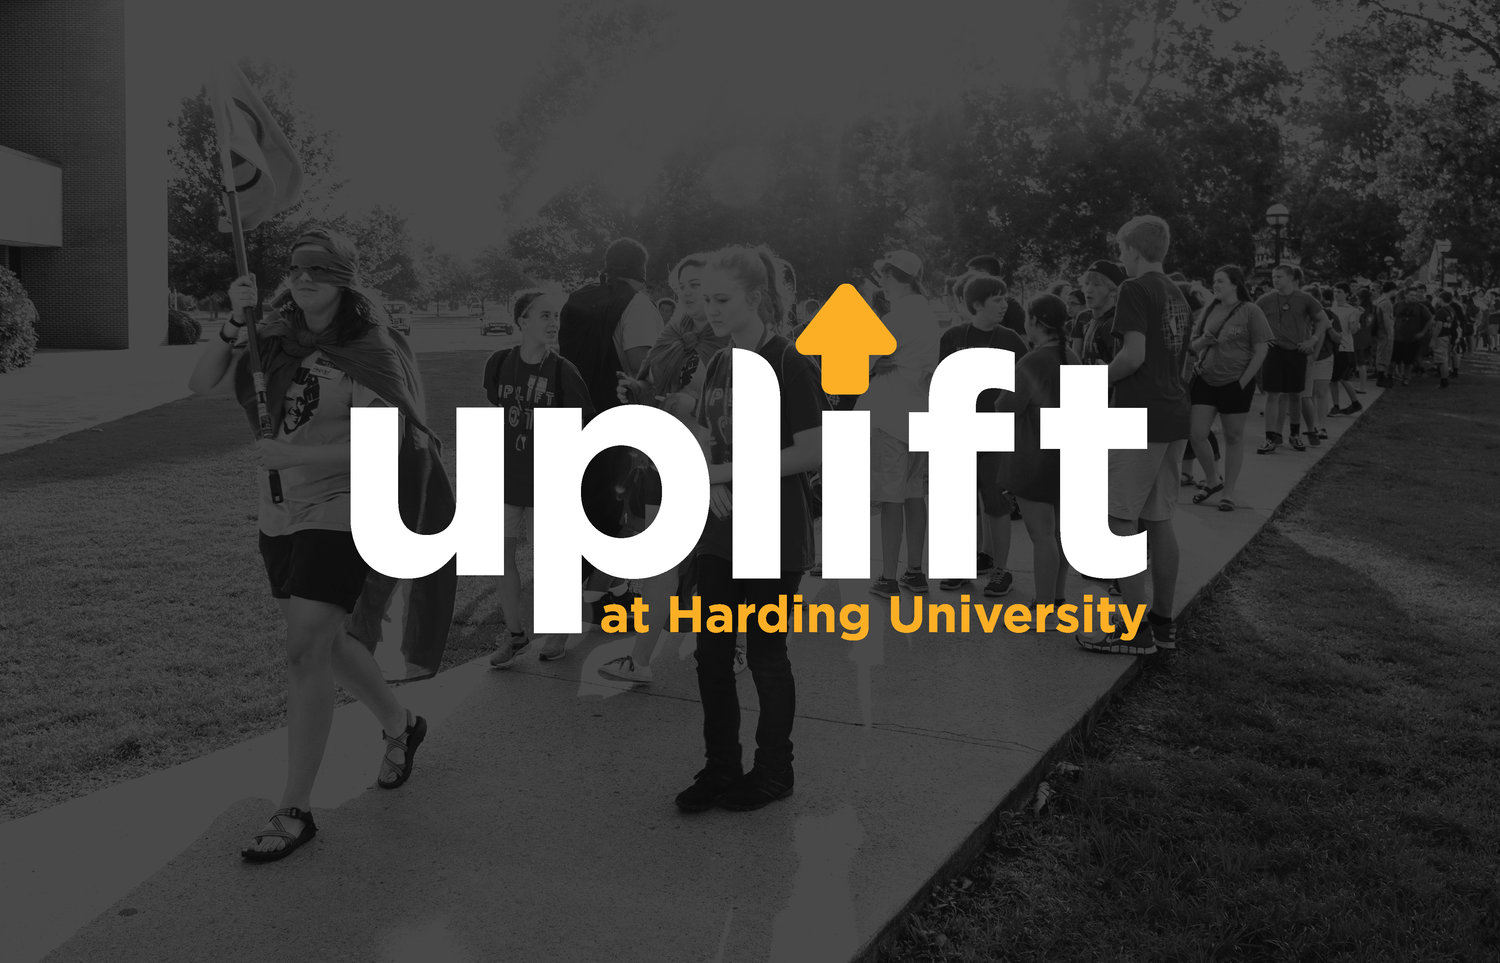 Poster of Uplift at Harding University